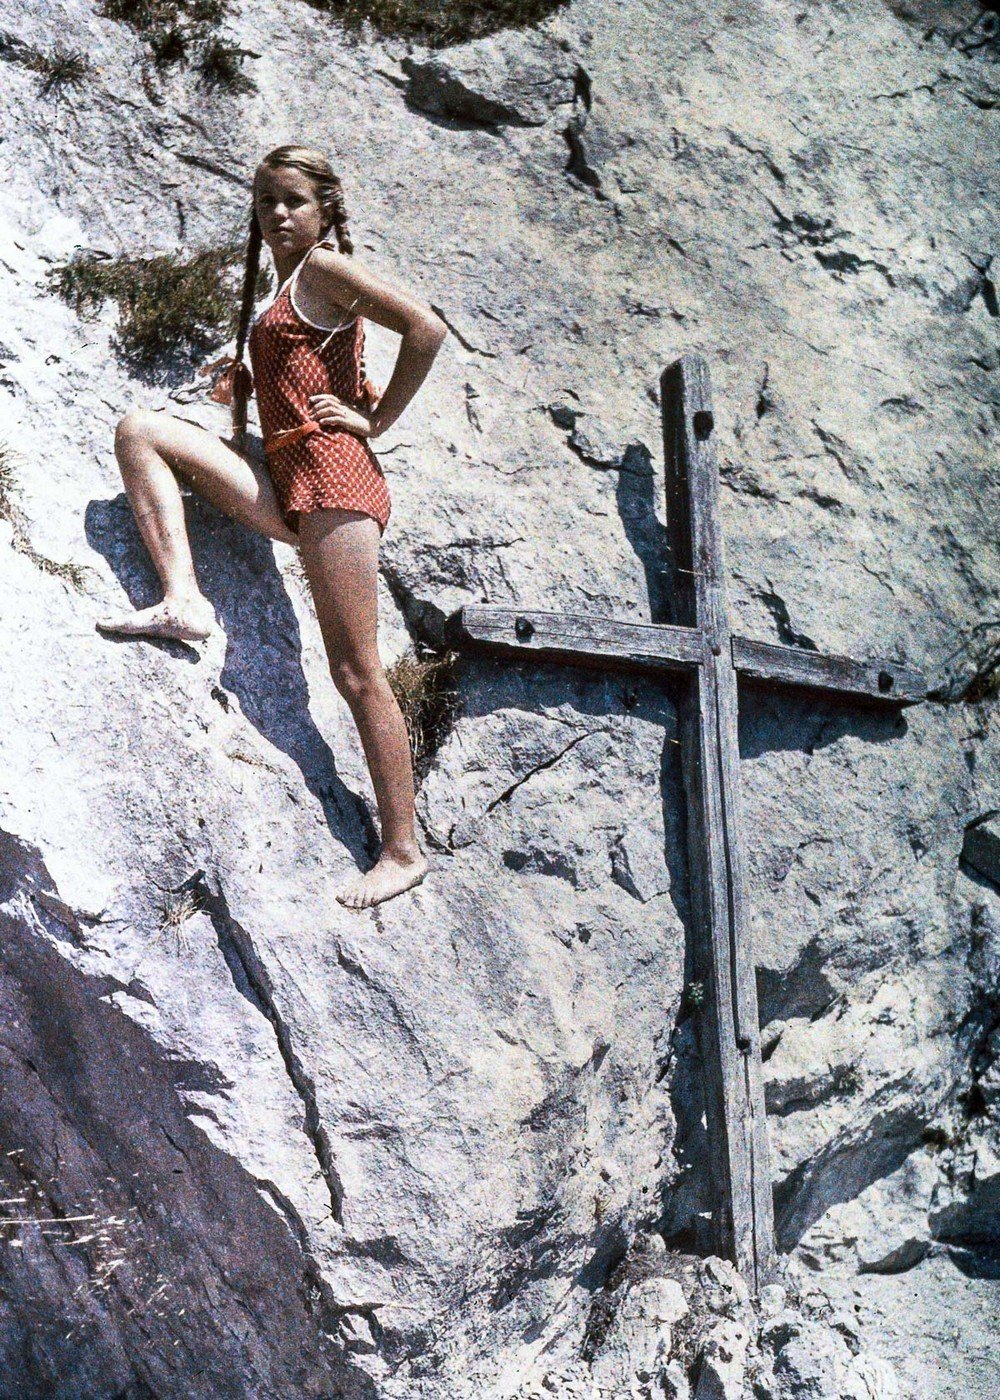 Eva climbing a rock face, Lake Luzern, Switzerland, c 1927.